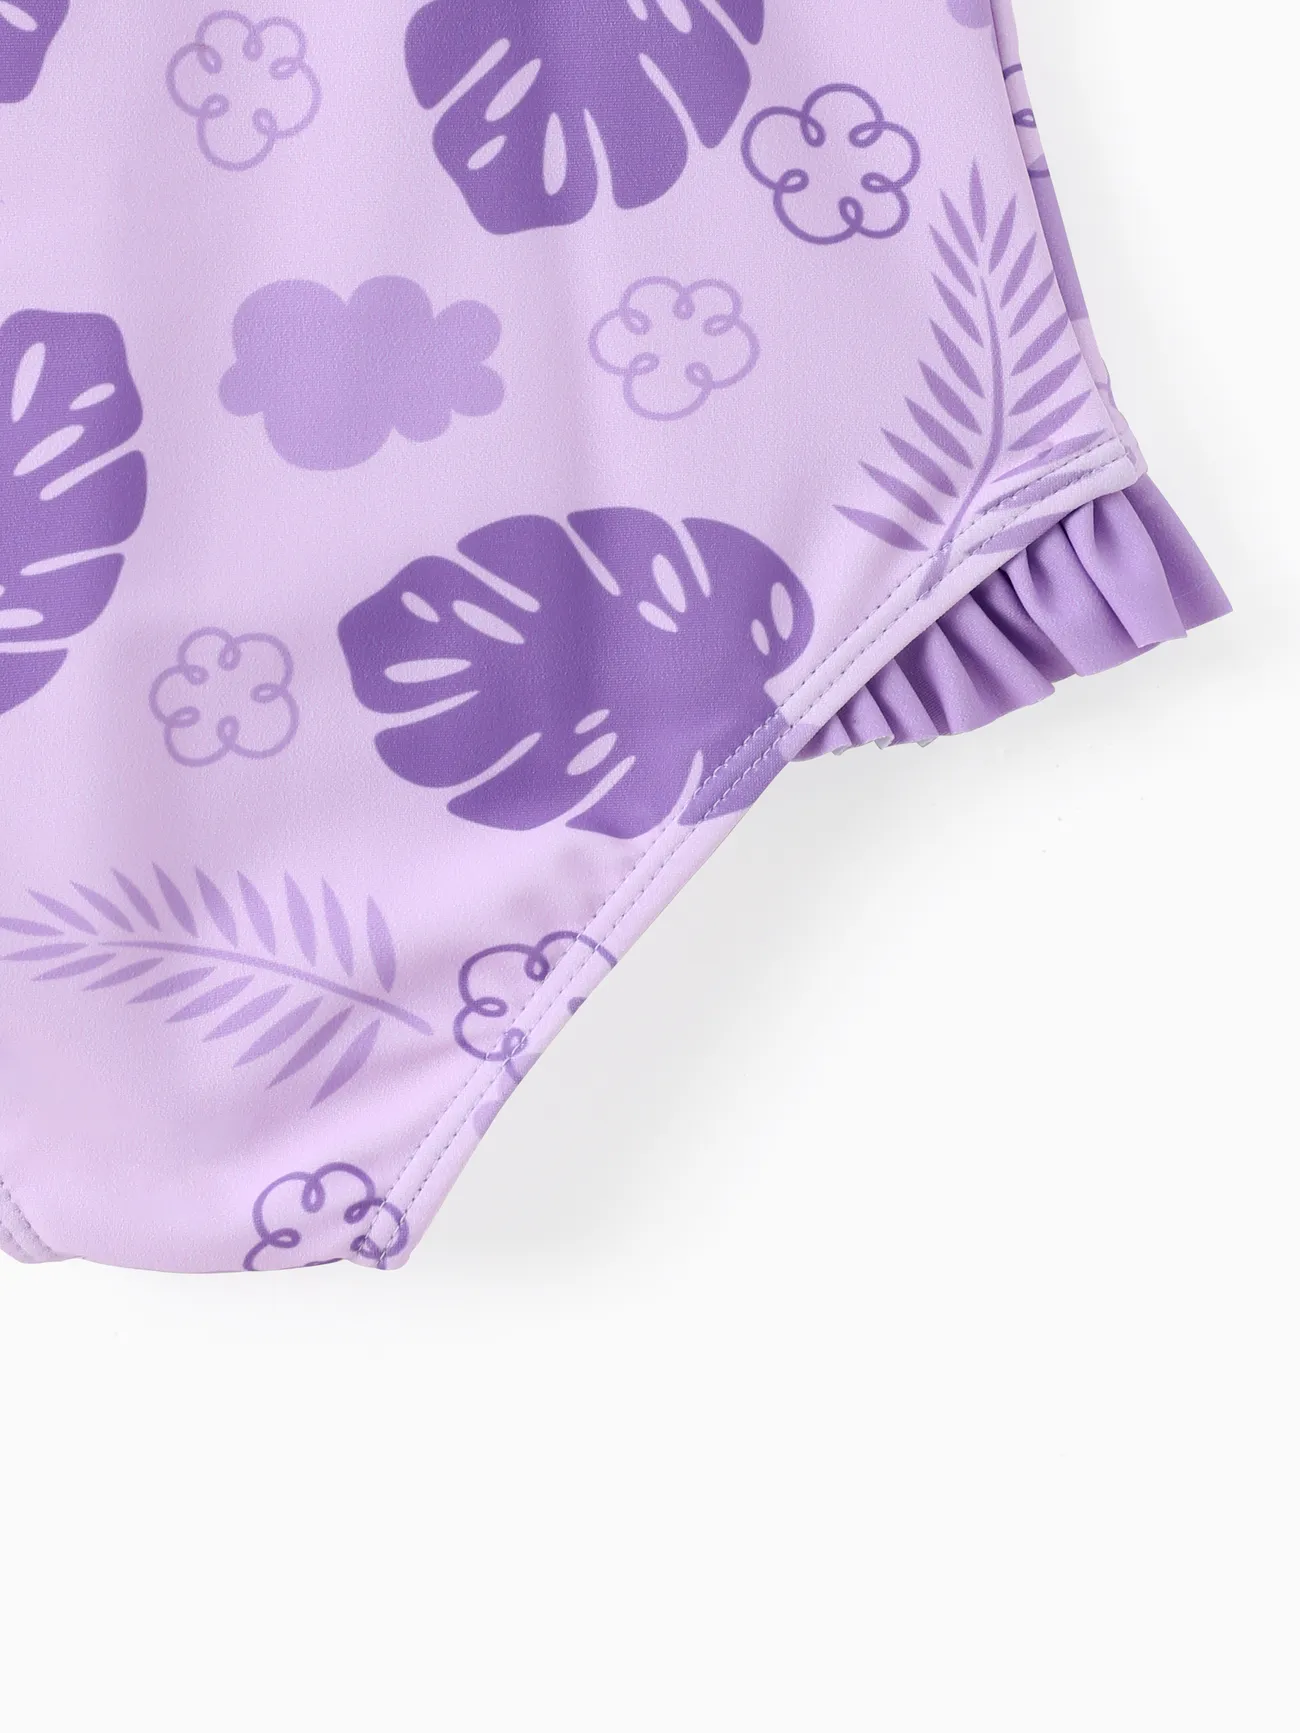 Disney Stitch Baby/Toddler Girls 1pc Character Floral Plant Print Ruffle-hem Swimsuit Purple big image 1